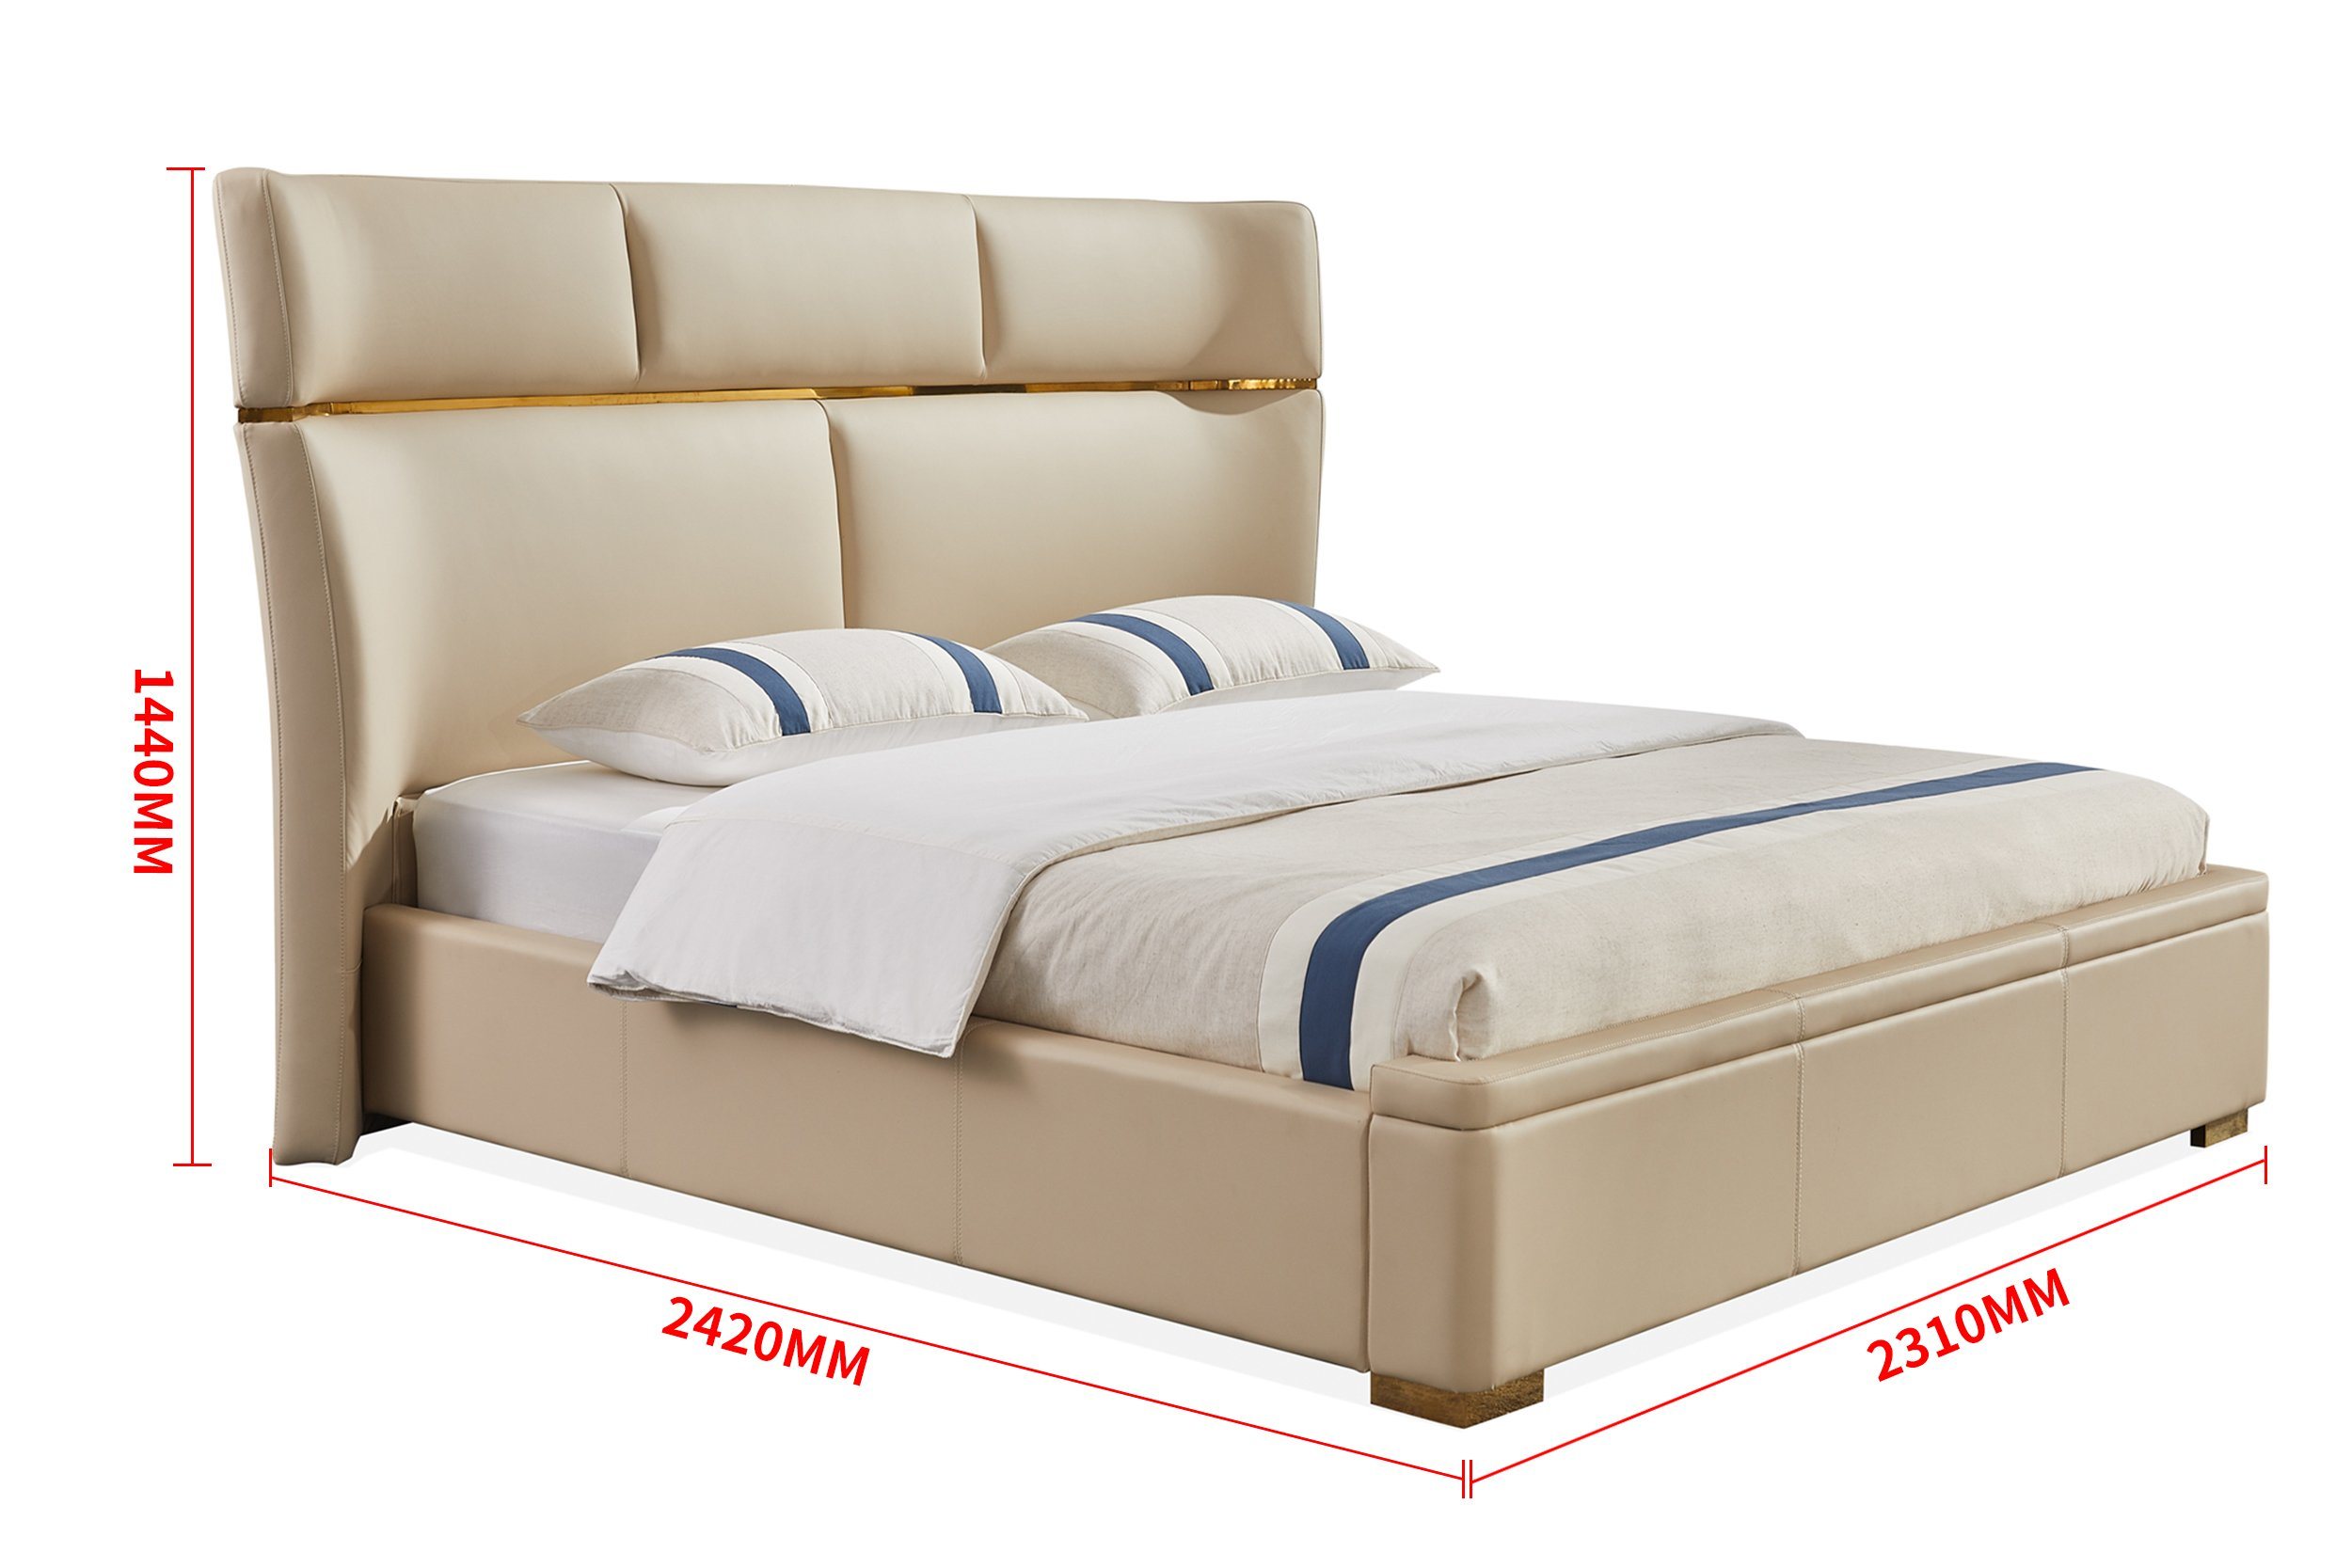 European Modern Light Luxury Bedroom Furniture Queen Size Leather Bed